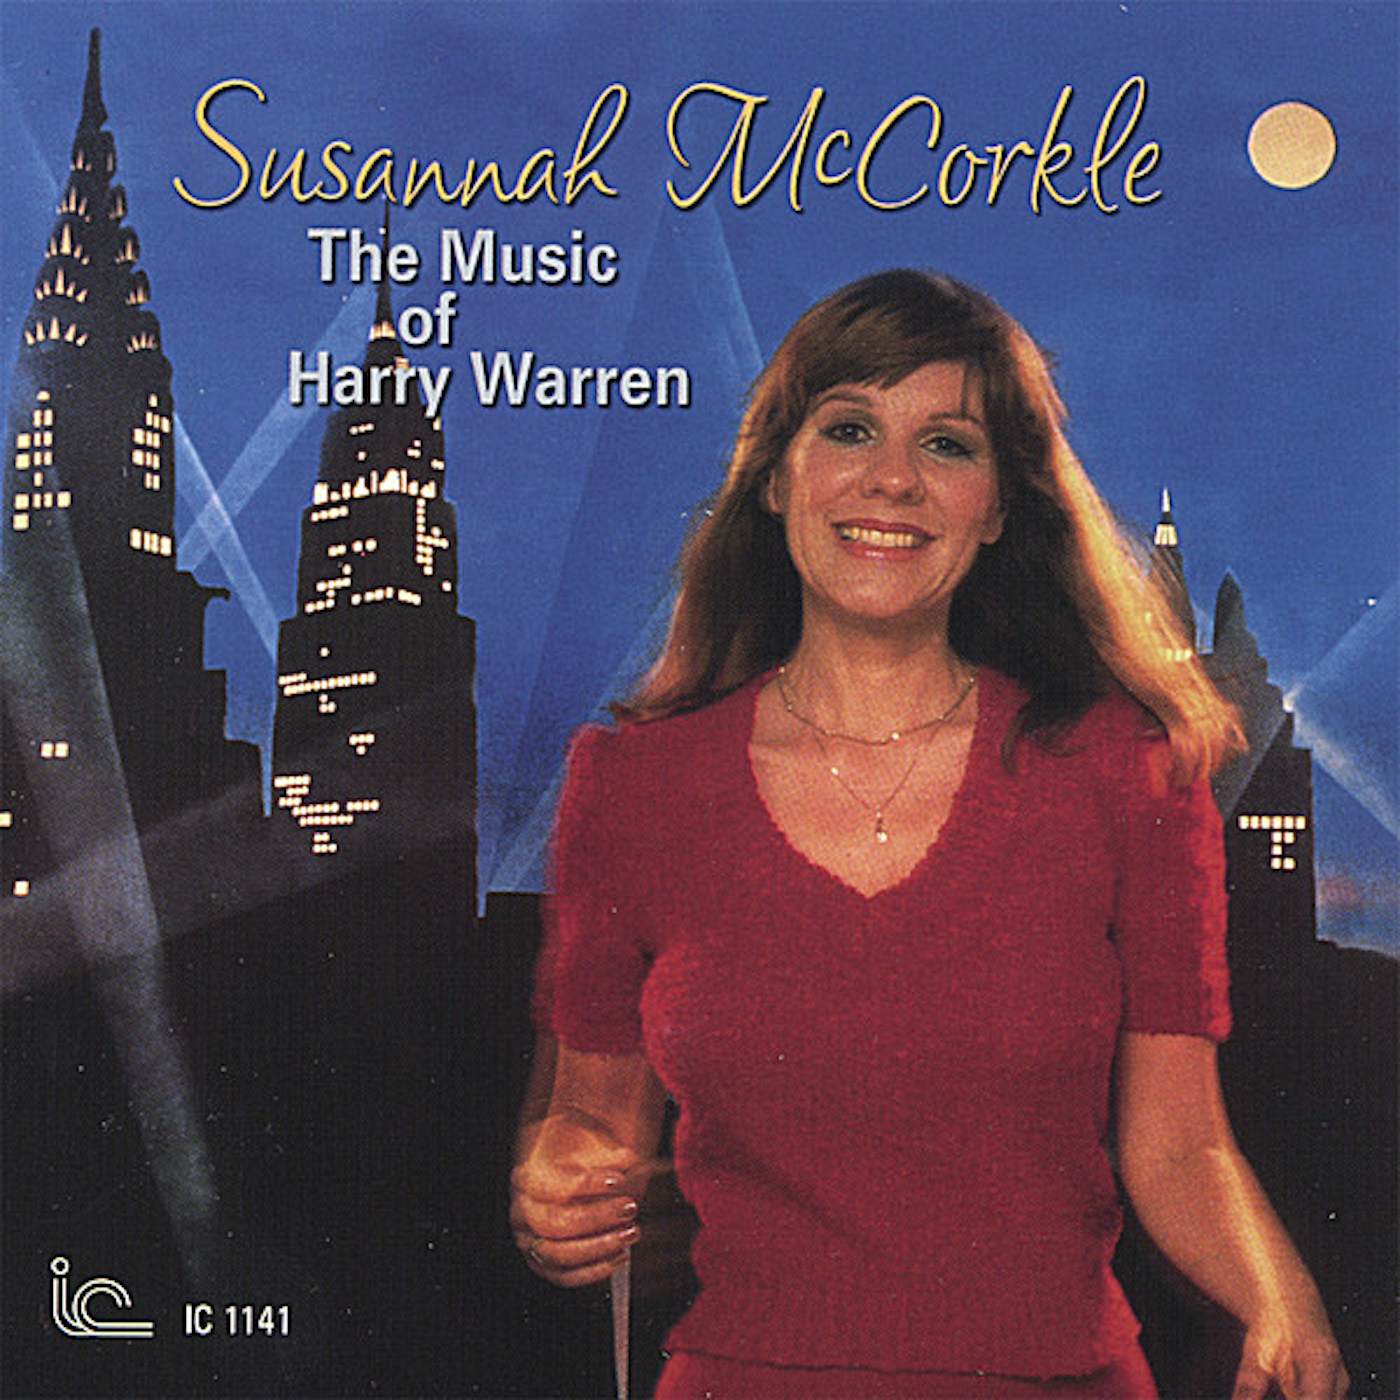 Susannah McCorkle MUSIC OF HARRY WARREN CD